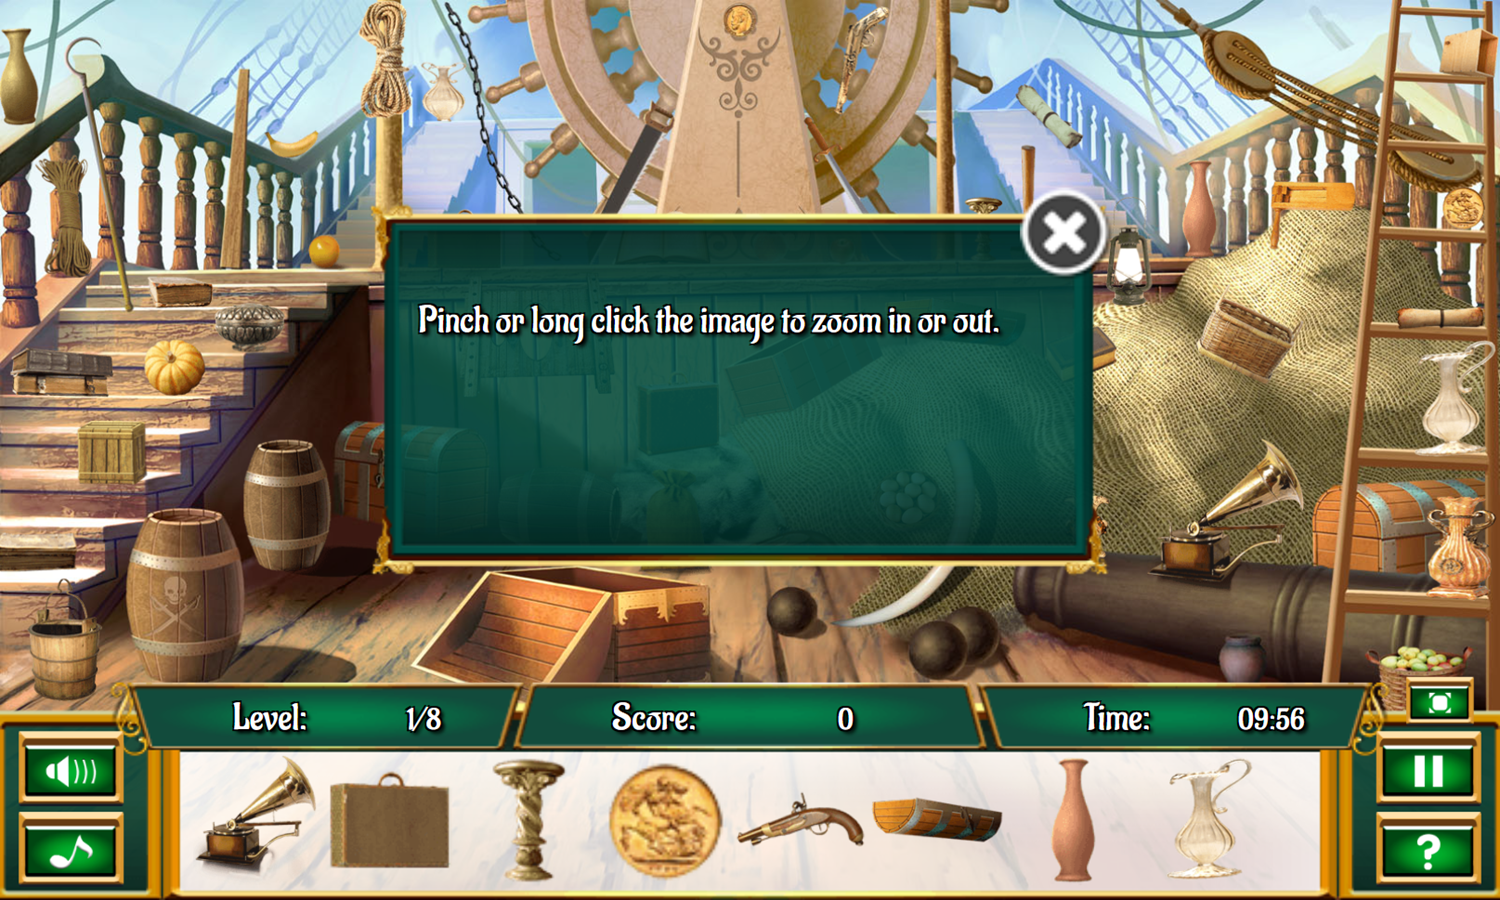 Pirates and Treasures Game Level Start Screenshot.